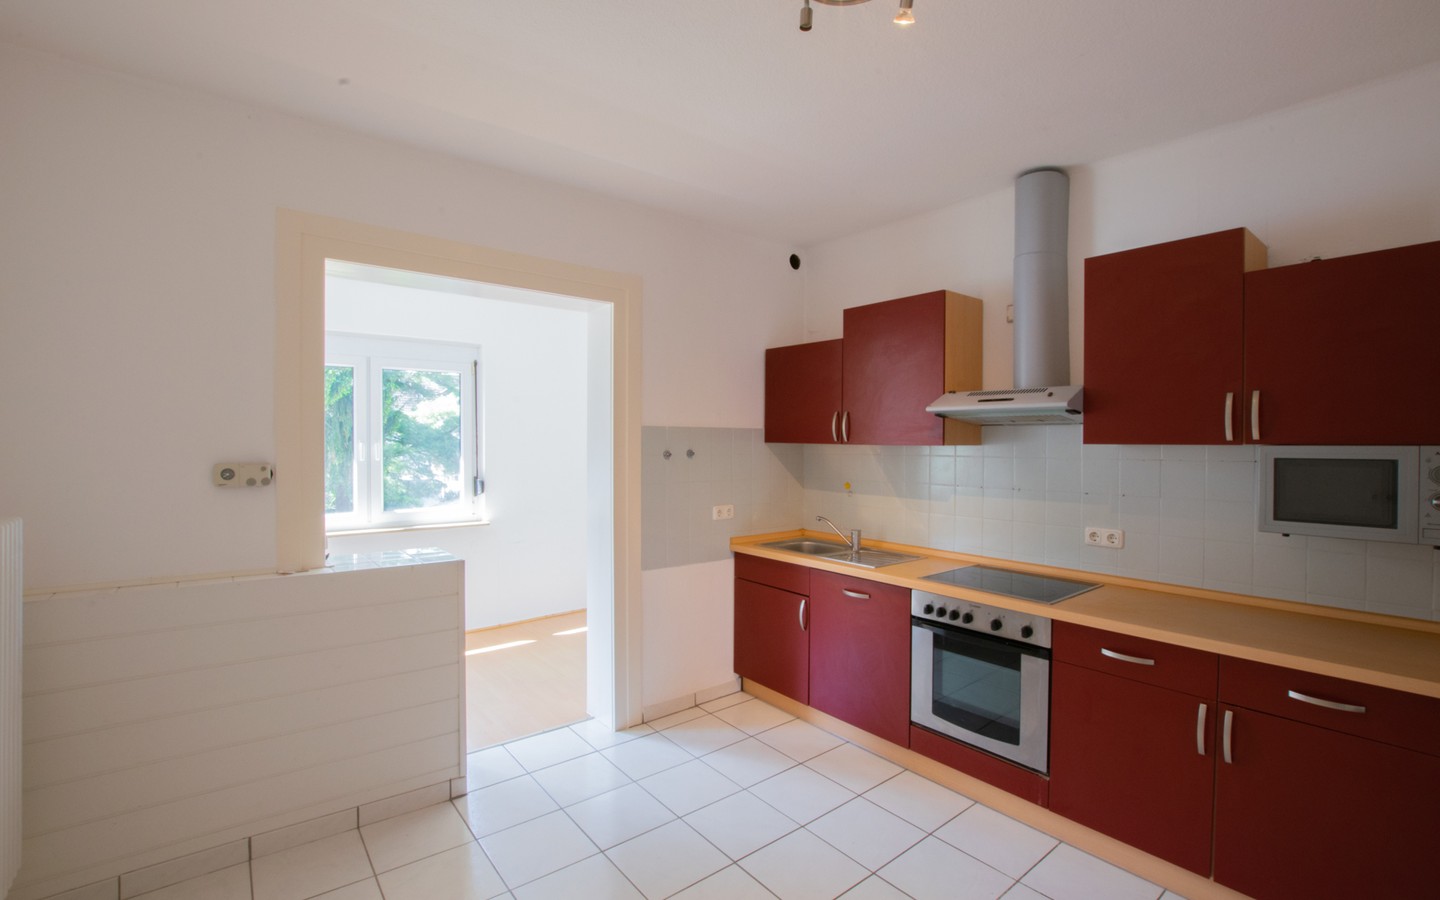 Küche 1. OG - Perfekt als Mehrgenerationendomizil: 4-Familienhaus mit viel Potenzial in HD-Kirchheim